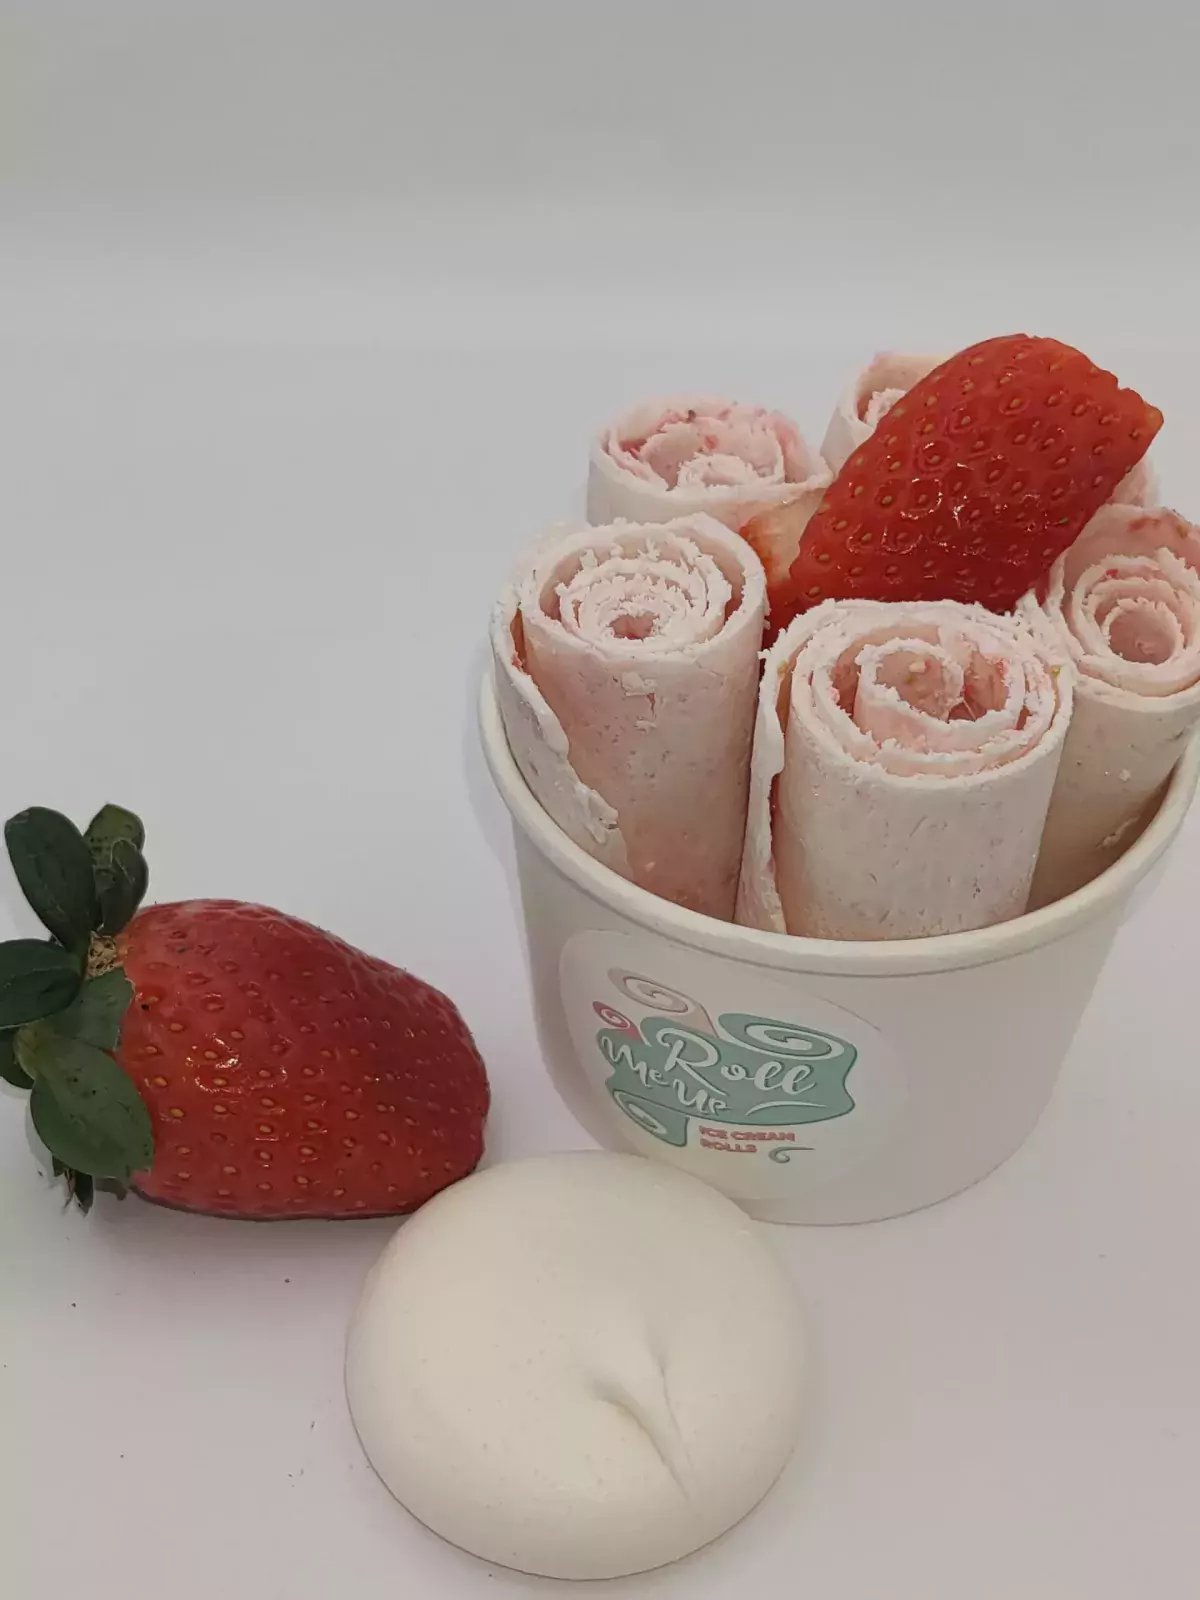 strawberry and meringue rolled ice cream